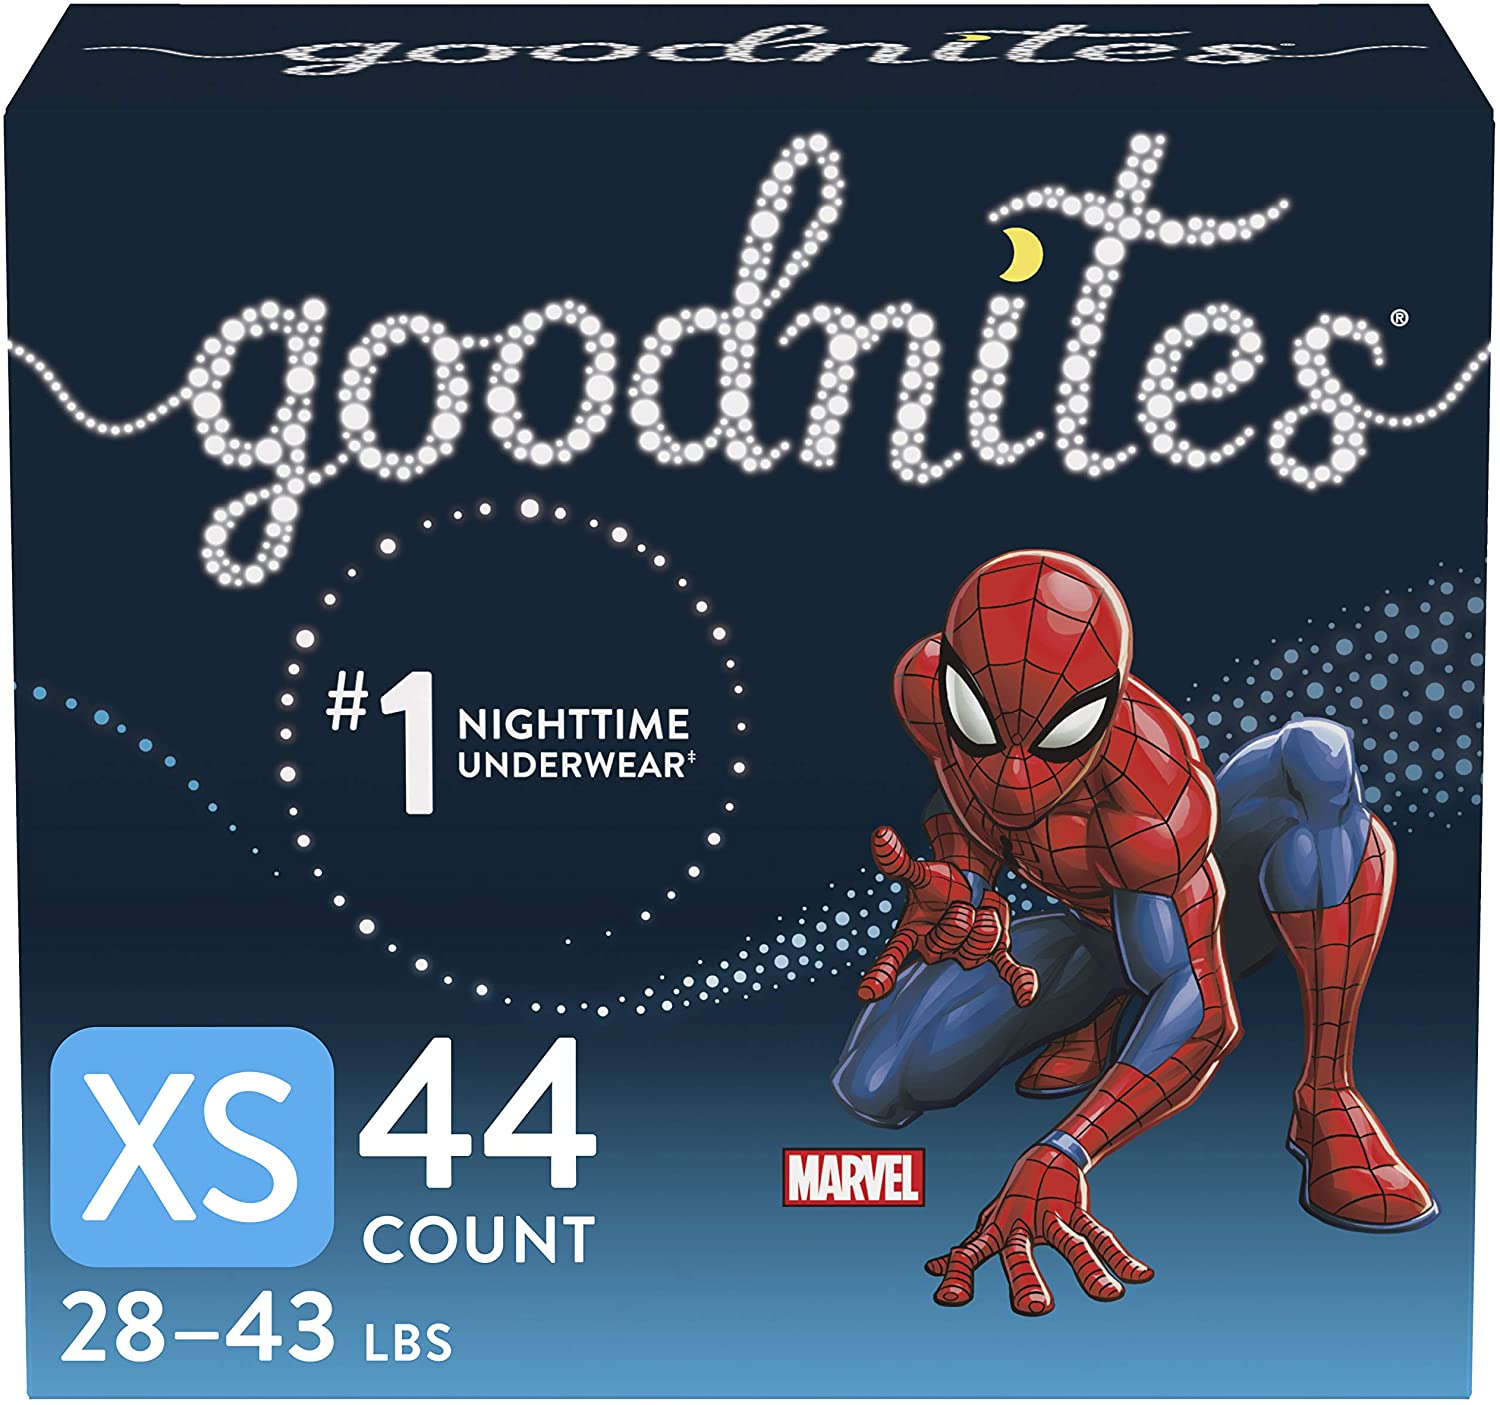 Goodnites Girls' Bedwetting Underwear XS (28-43 lbs), 15 ct